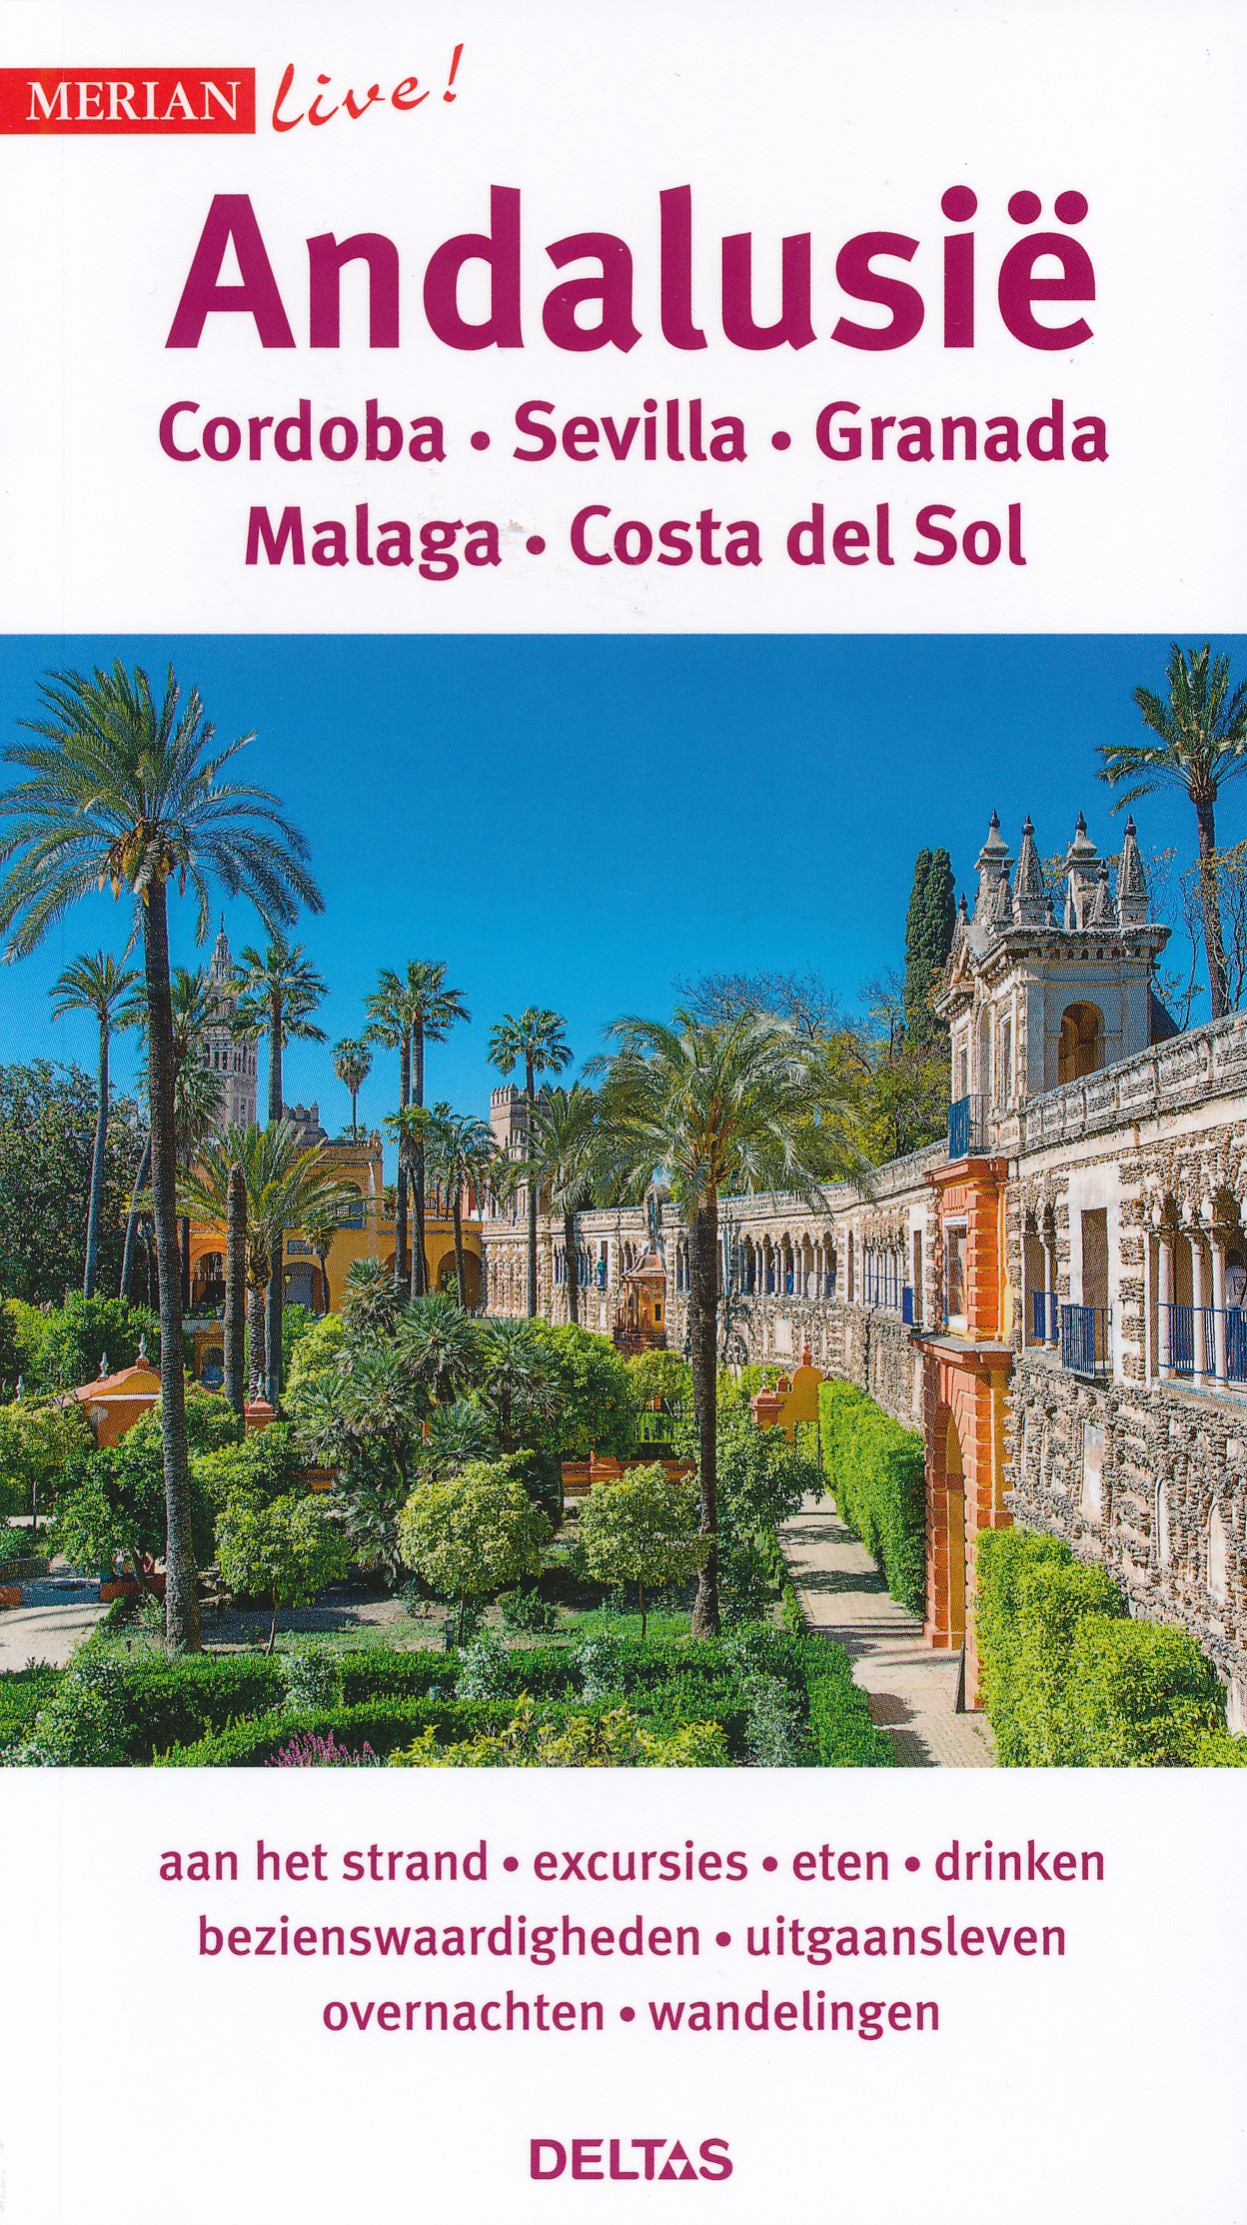 Online bestellen: Reisgids Merian live Andalusië | Deltas